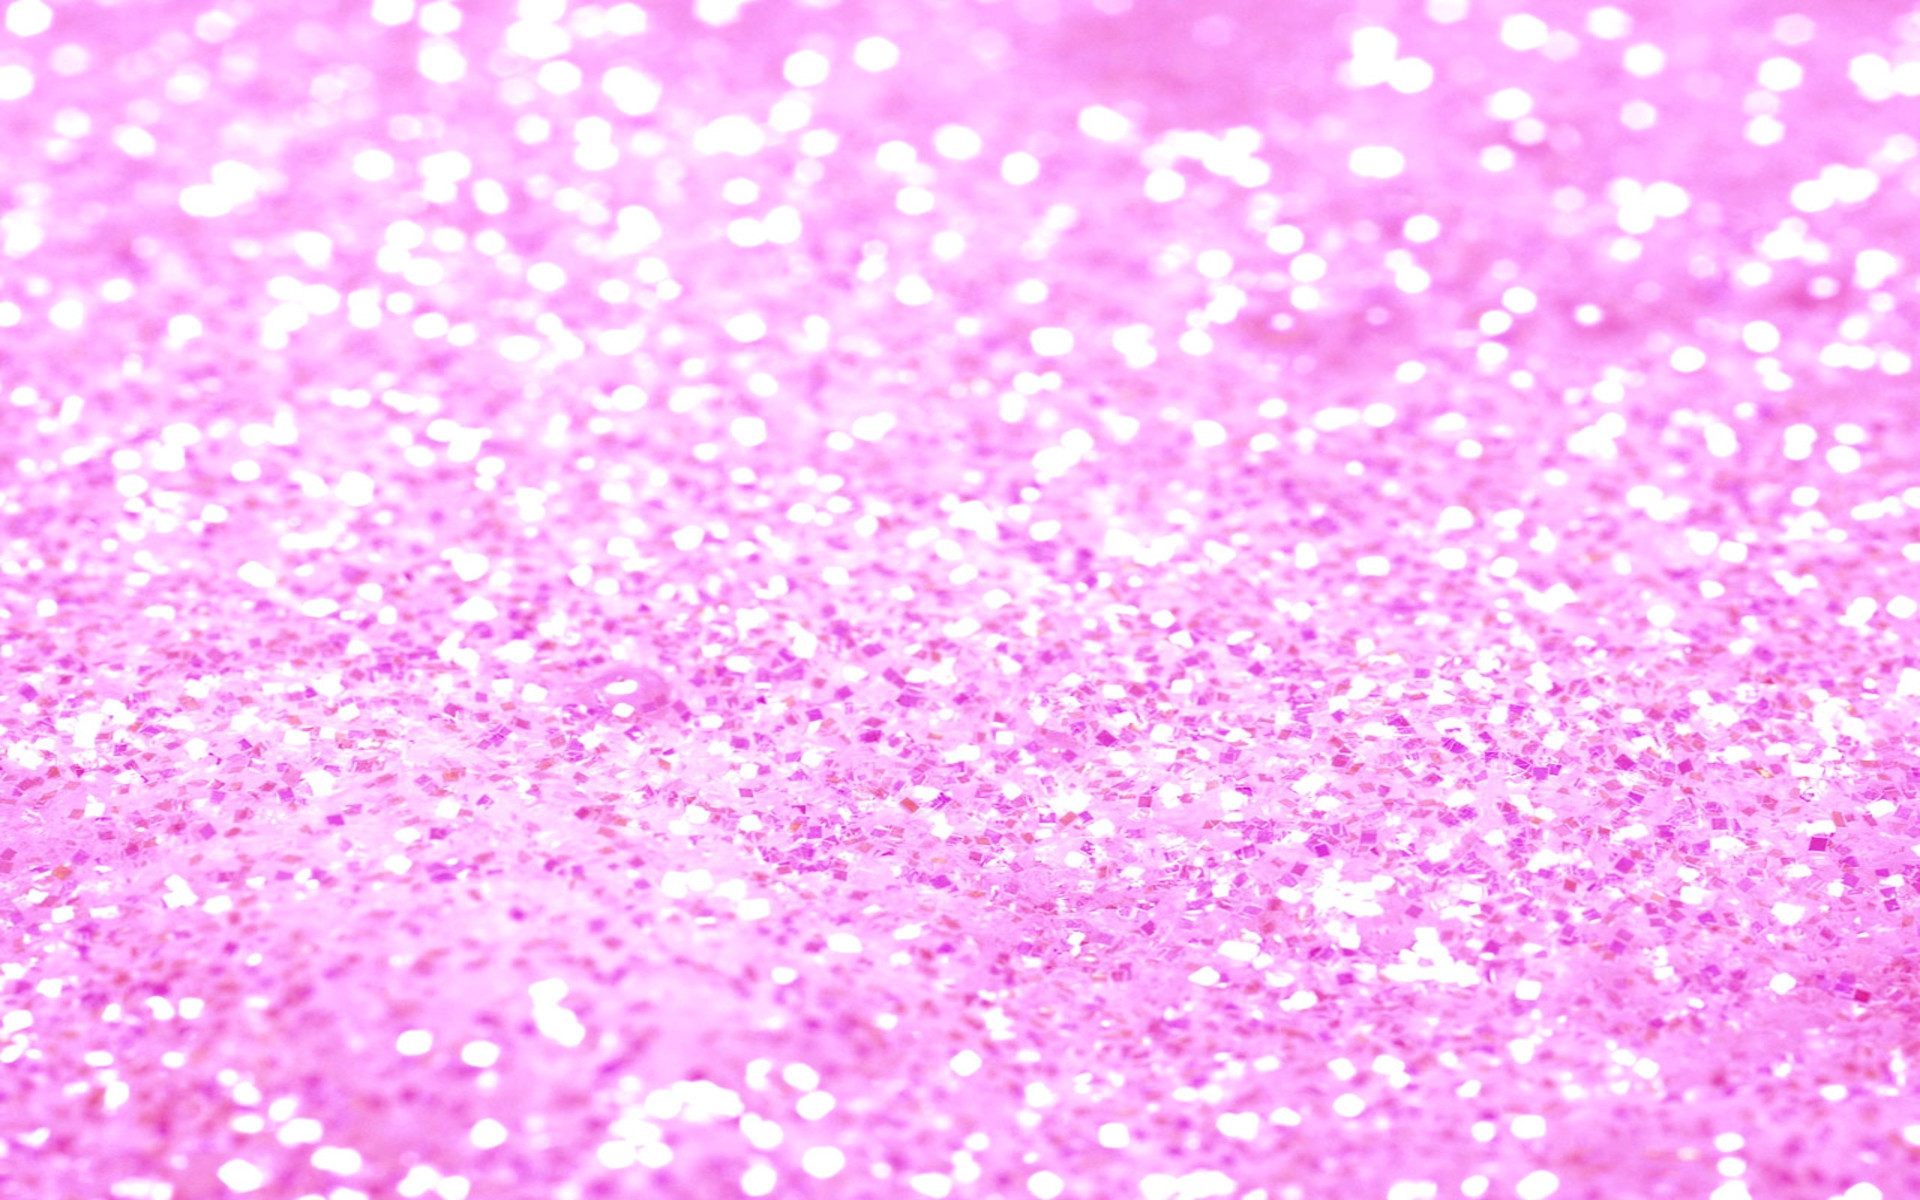 Galaxy Glitter Colorful Background Wallpaper